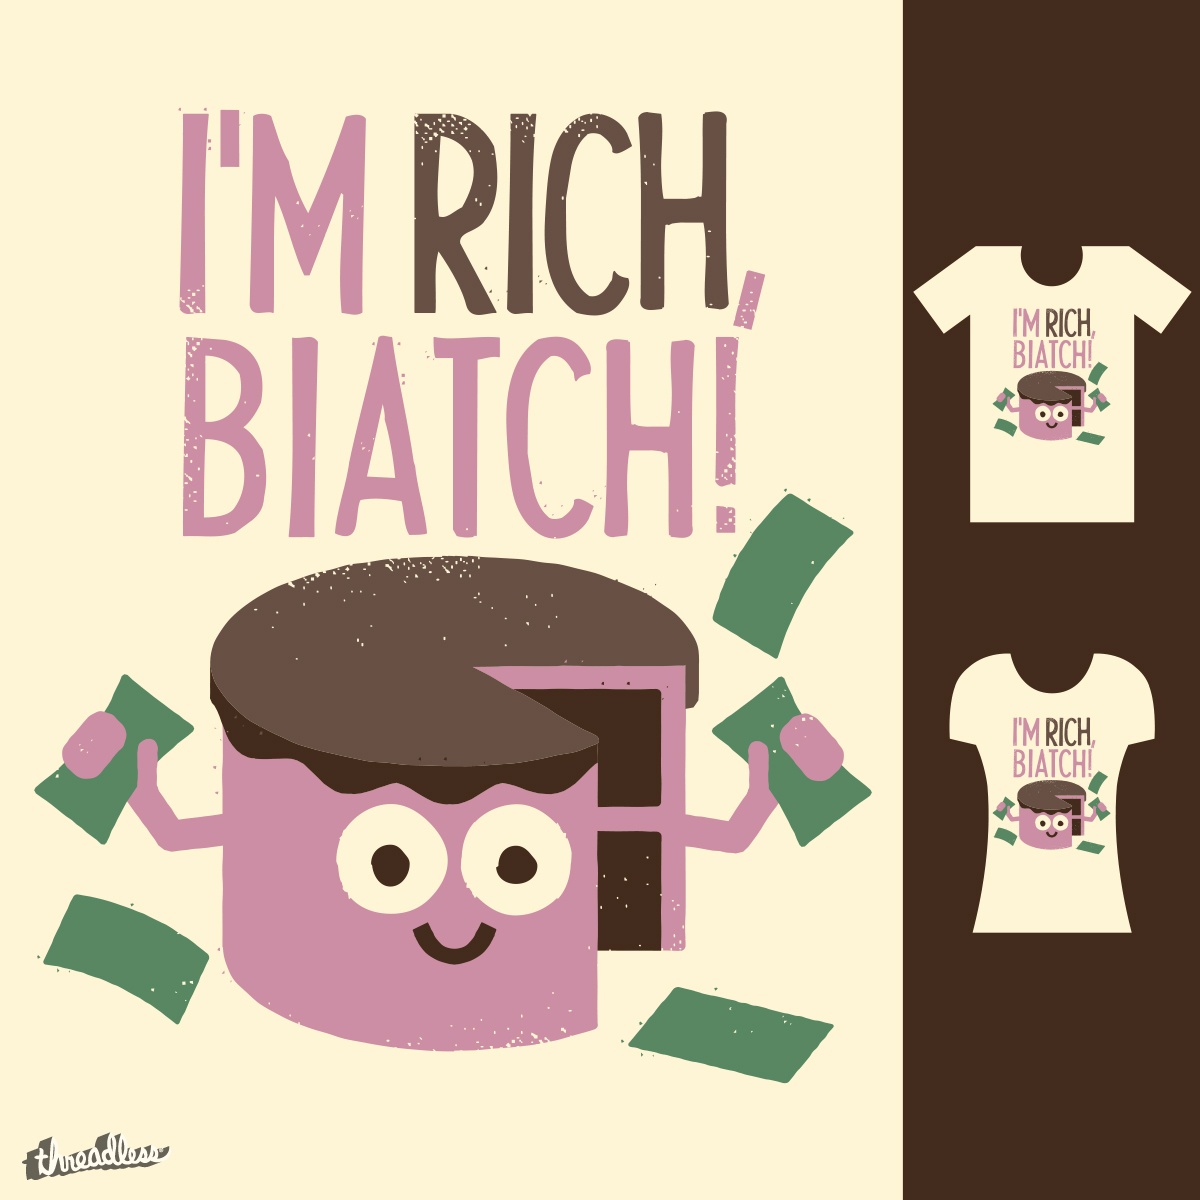 illustration - I'M Rich I'M Rich Biatchi I'M Rich Biatch! 00 oo thwademois